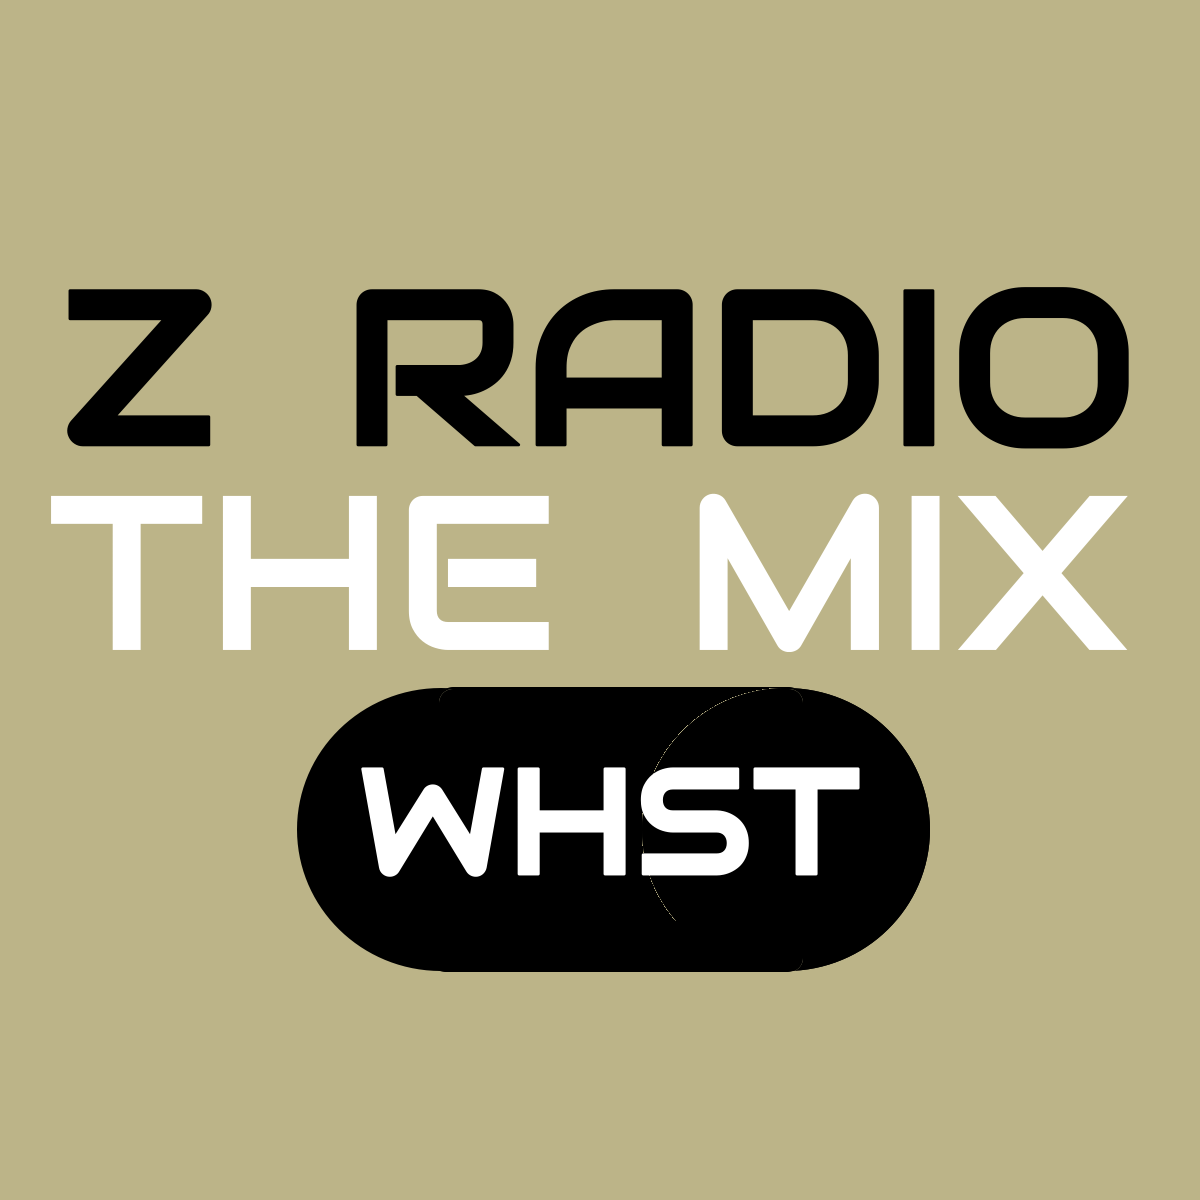 Art for Z RADIO 24/7 Around The World by Z Radio The Mix